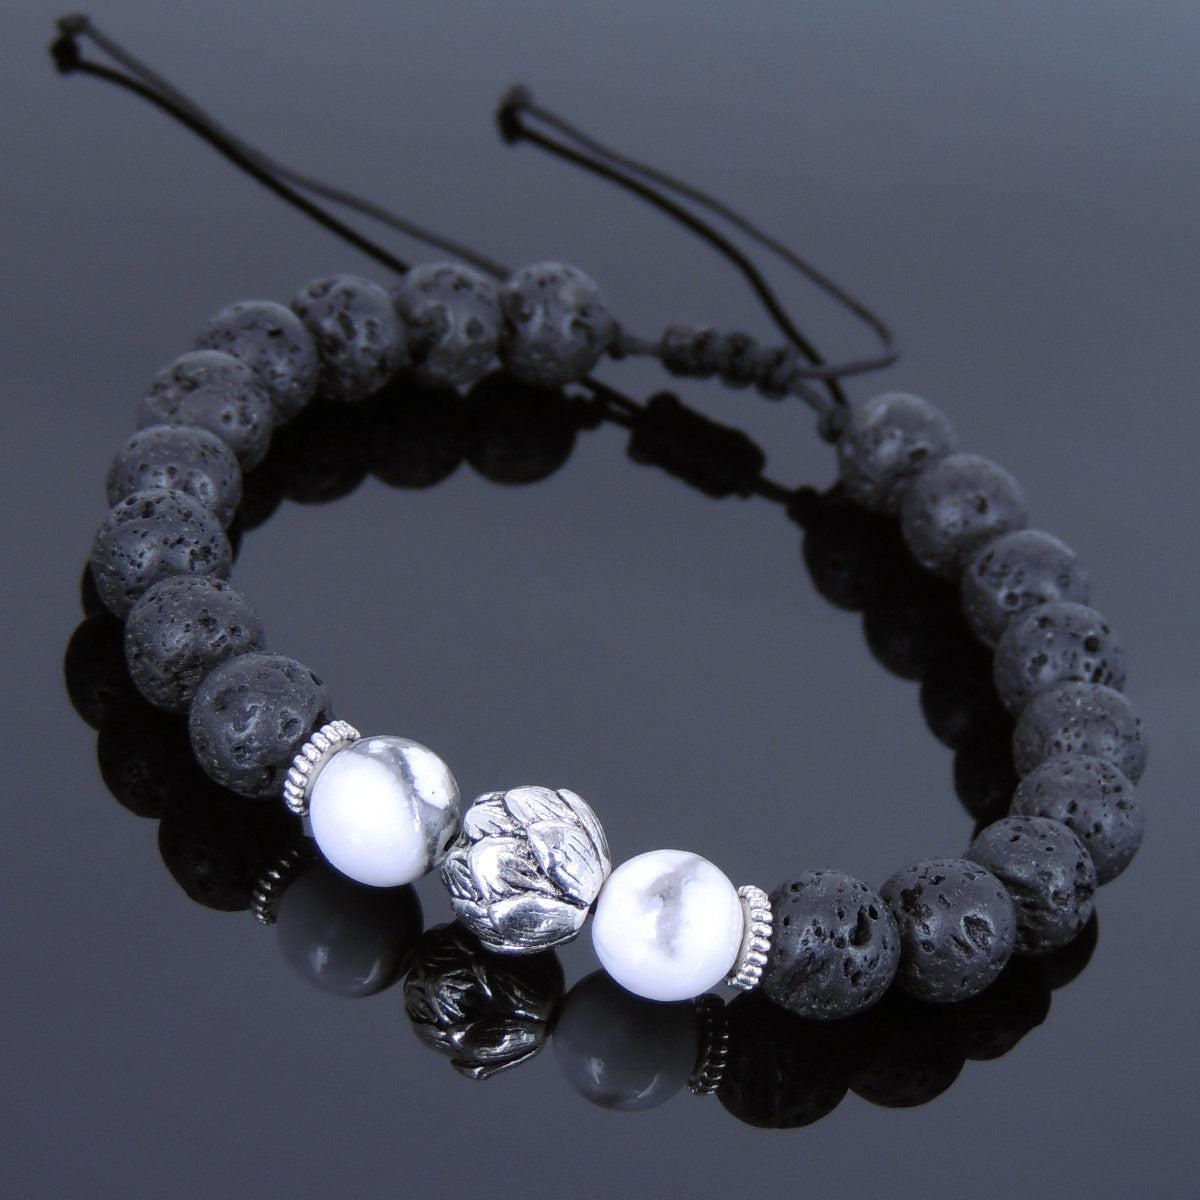 White Howlite & Lava Rock Adjustable Braided Gemstone Bracelet with Tibetan Silver Lotus Bead - Handmade by Gem & Silver TSB259